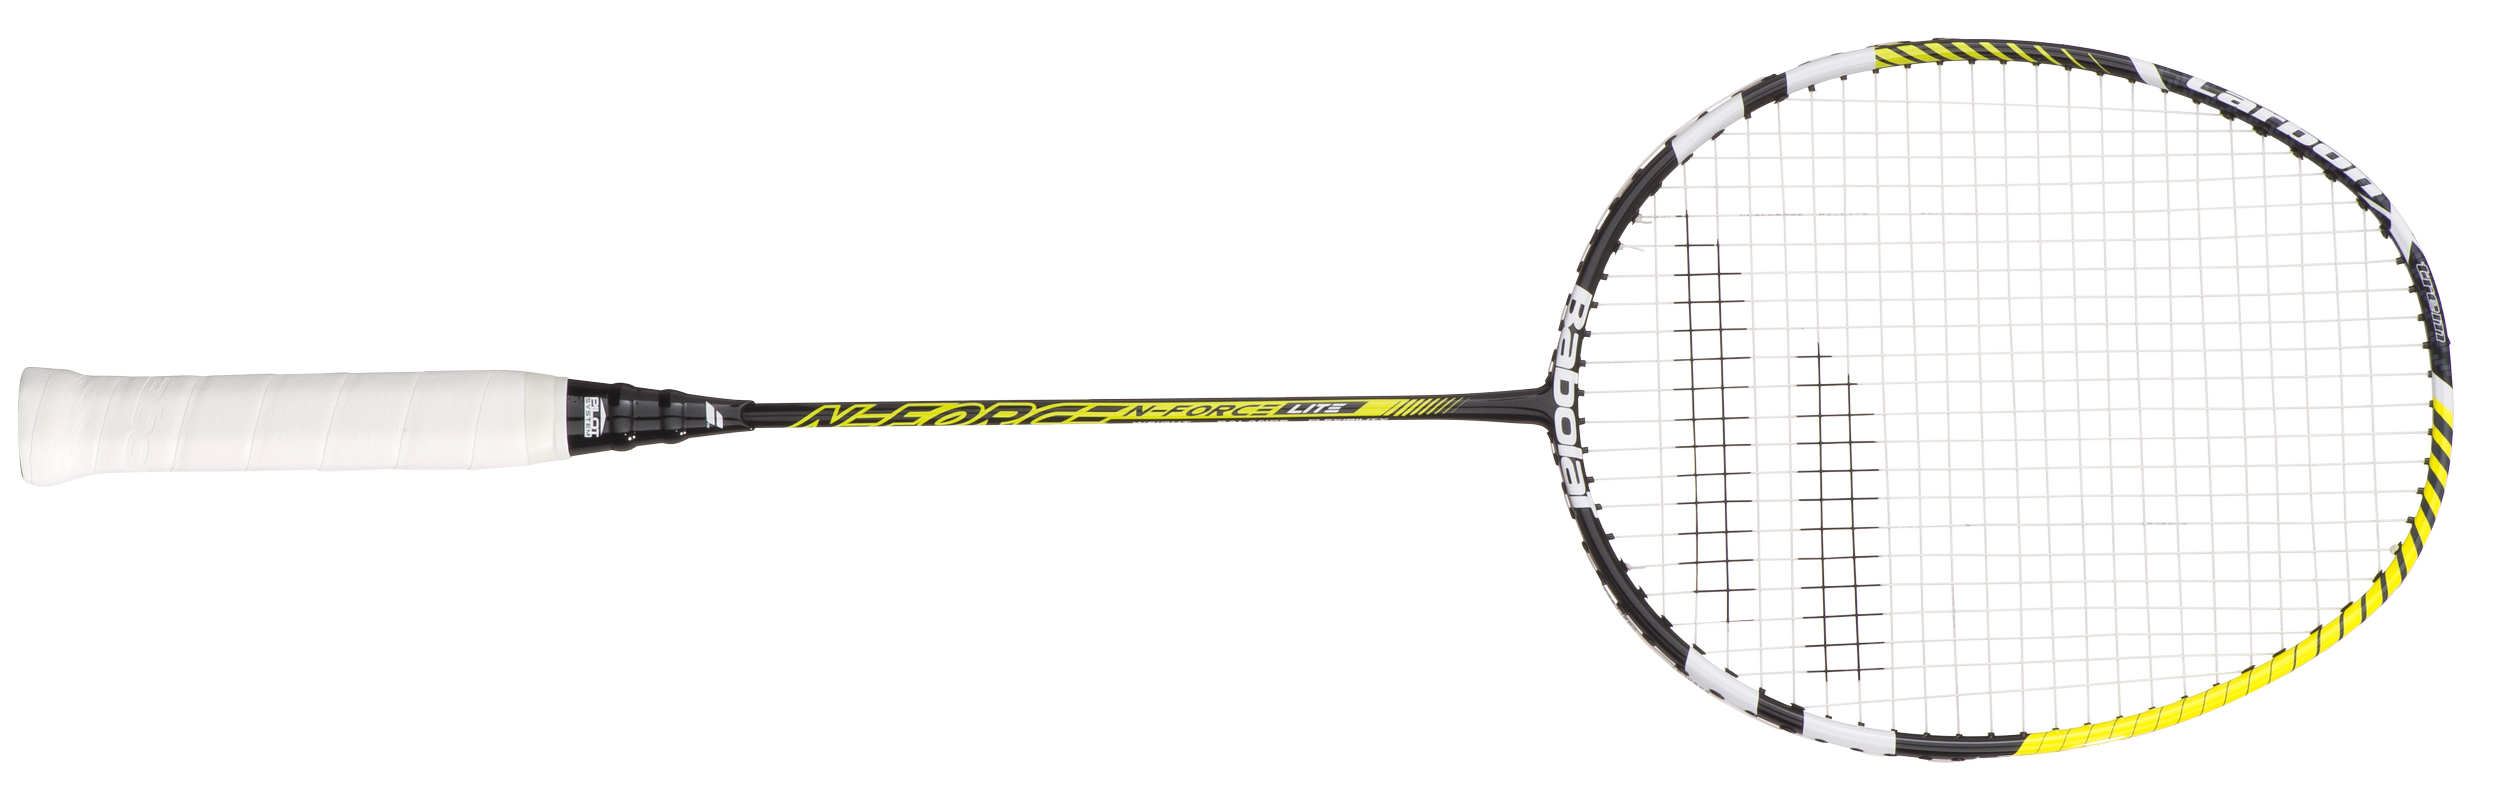 Badminton Racket Transparent Background PNG